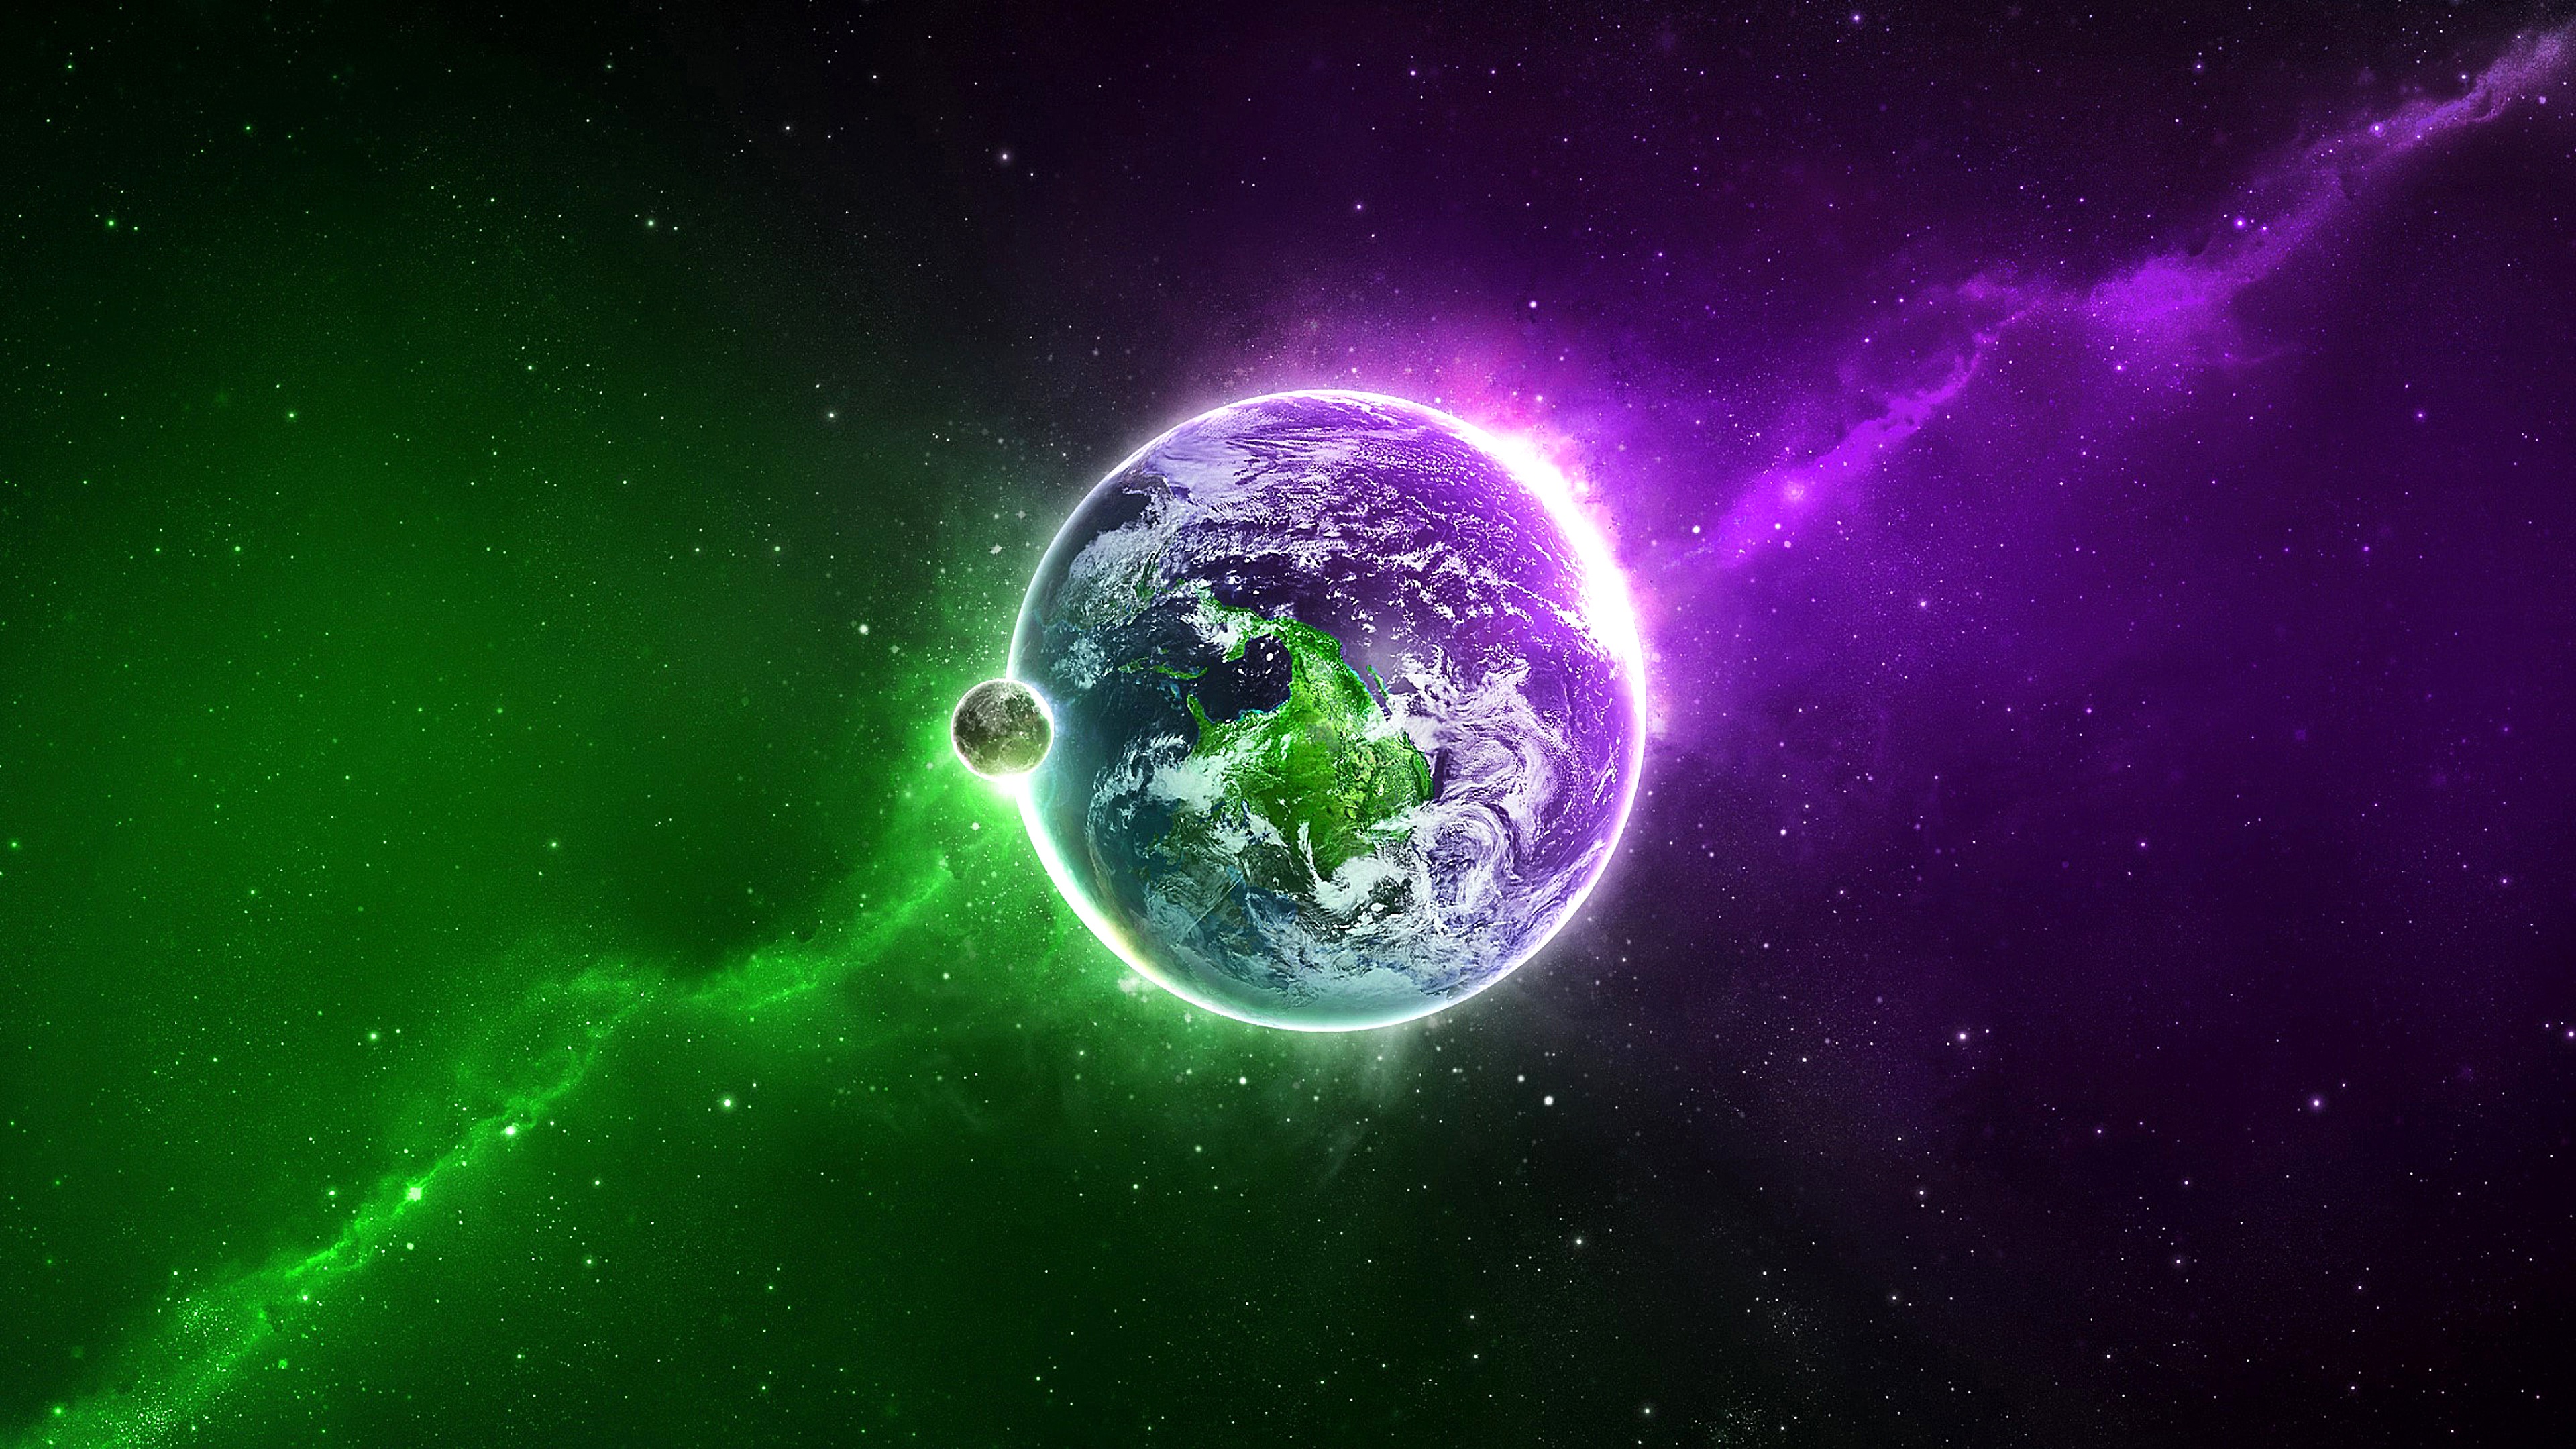 papel tapiz morado y verde,verde,naturaleza,espacio exterior,objeto astronómico,planeta